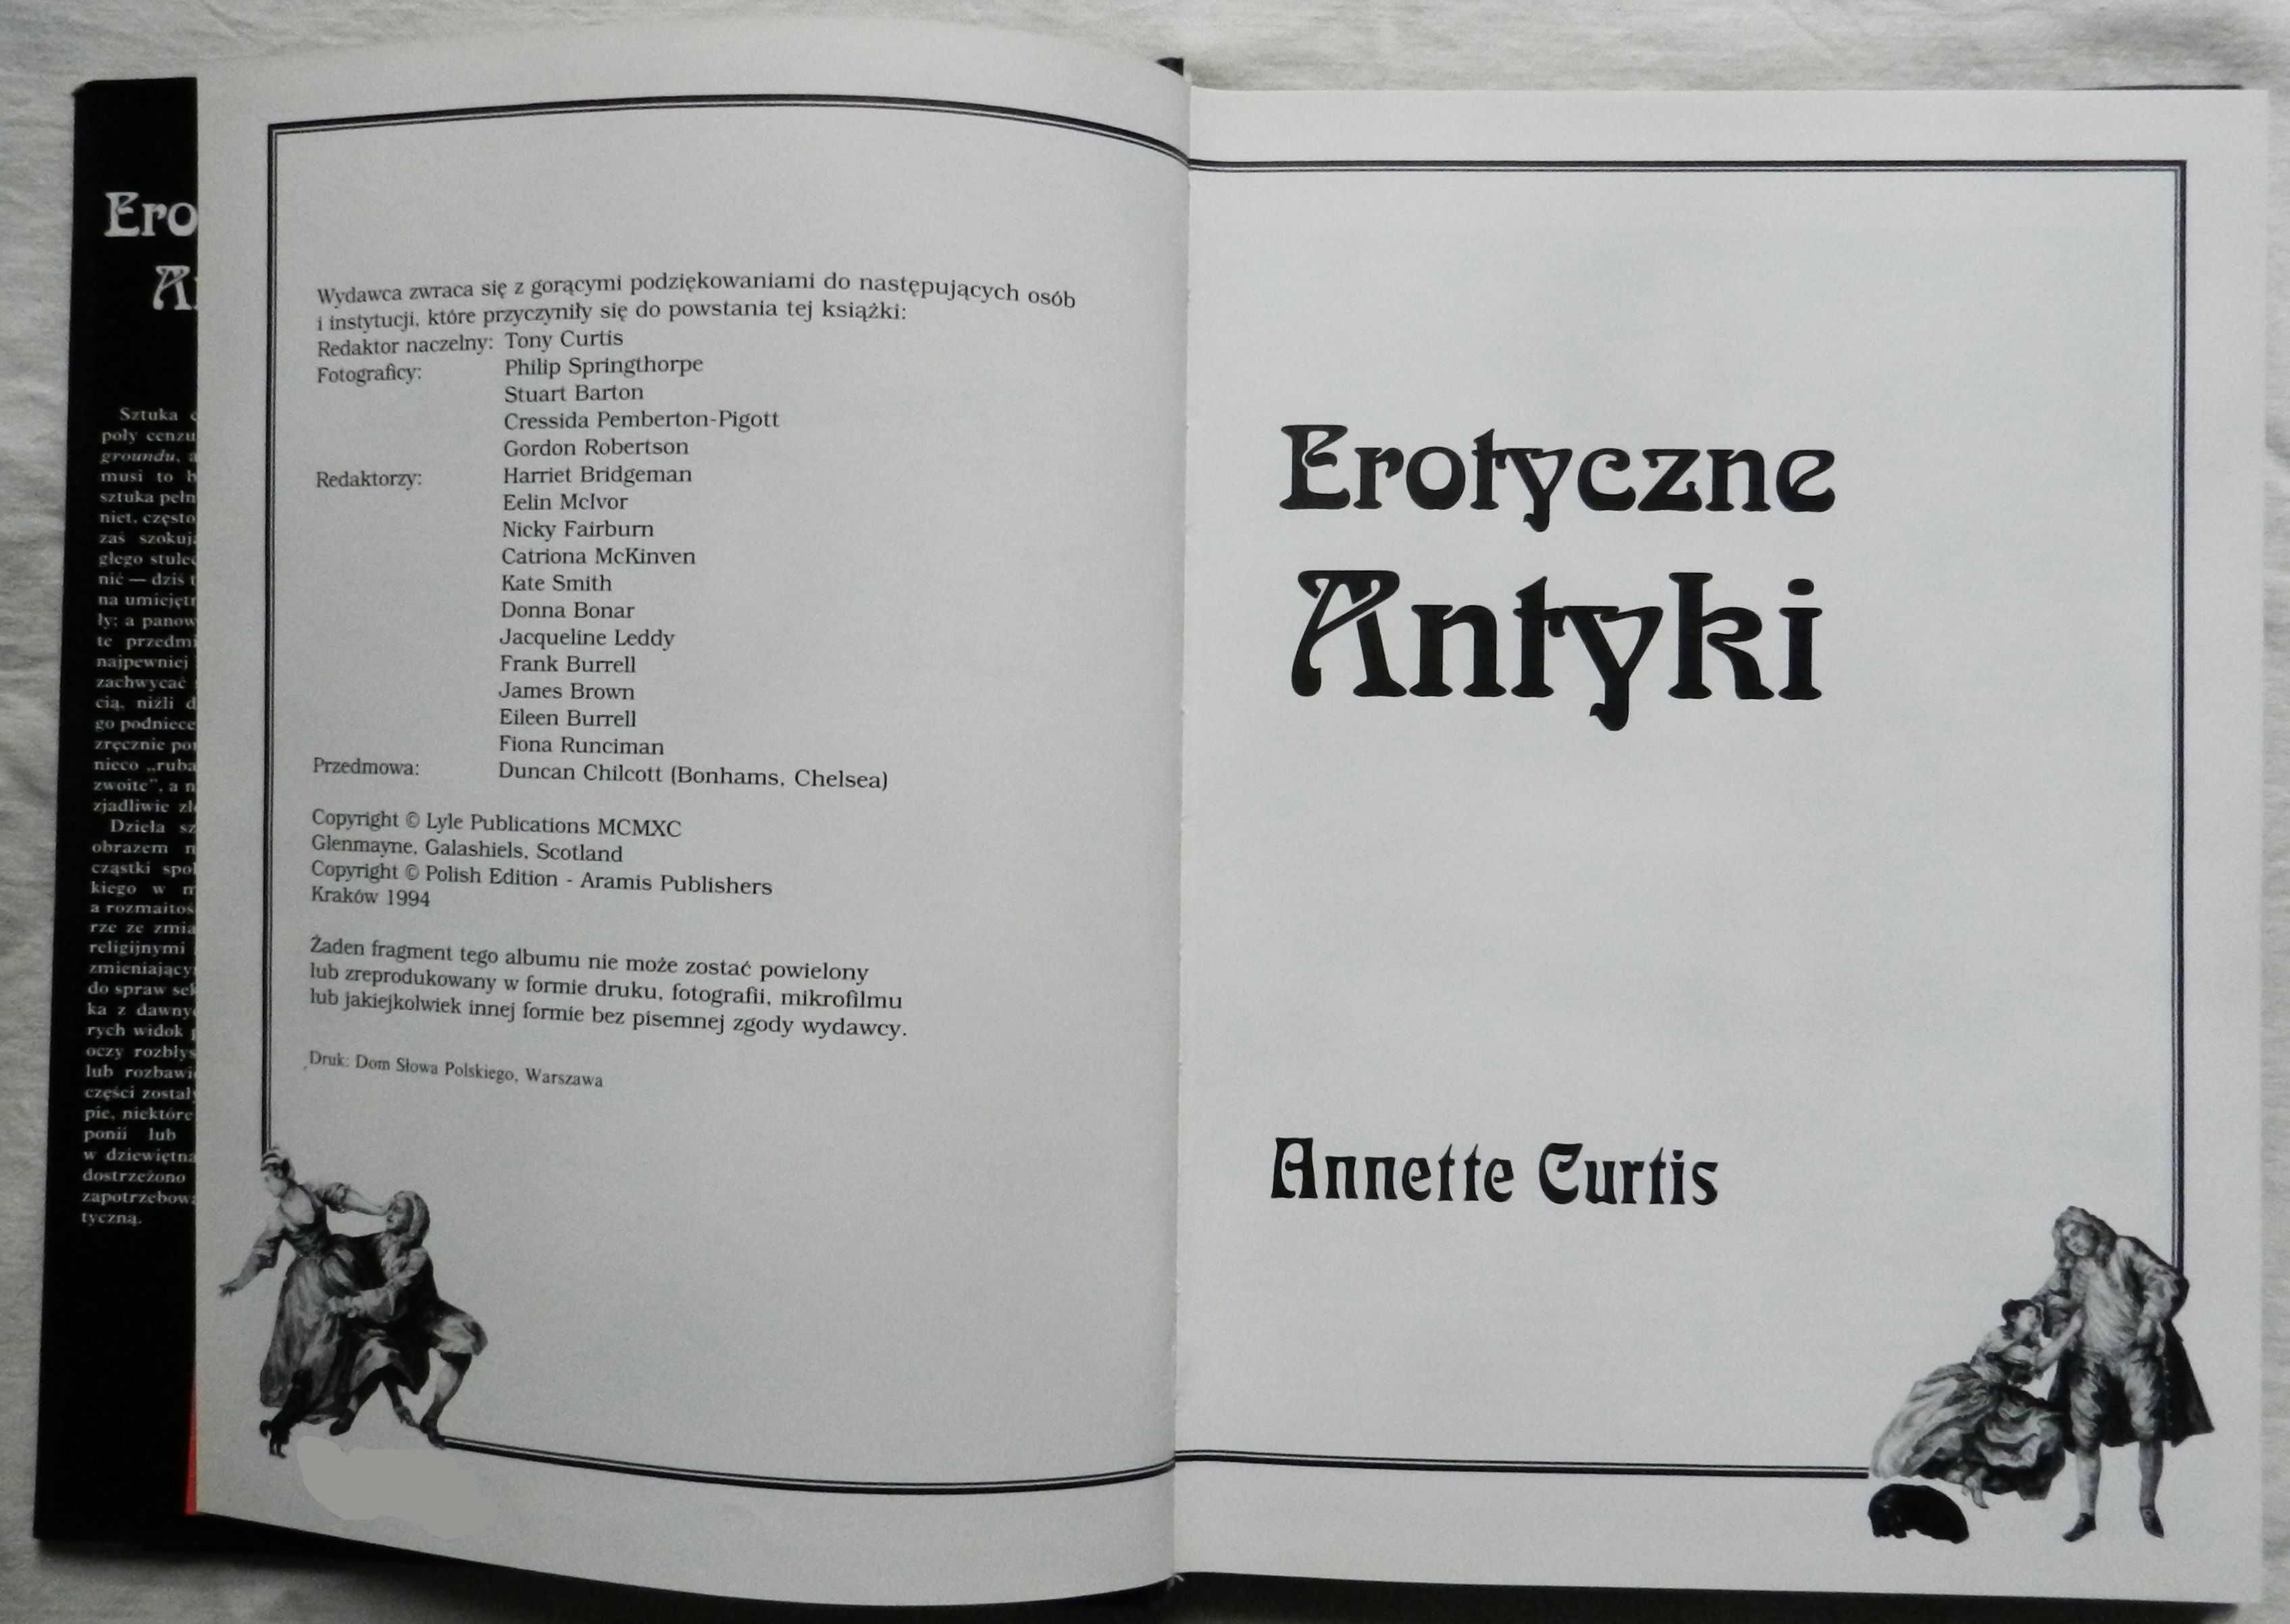 Curtis Annette - Erotyczne antyki, album ilustrowany, historia, sztuka